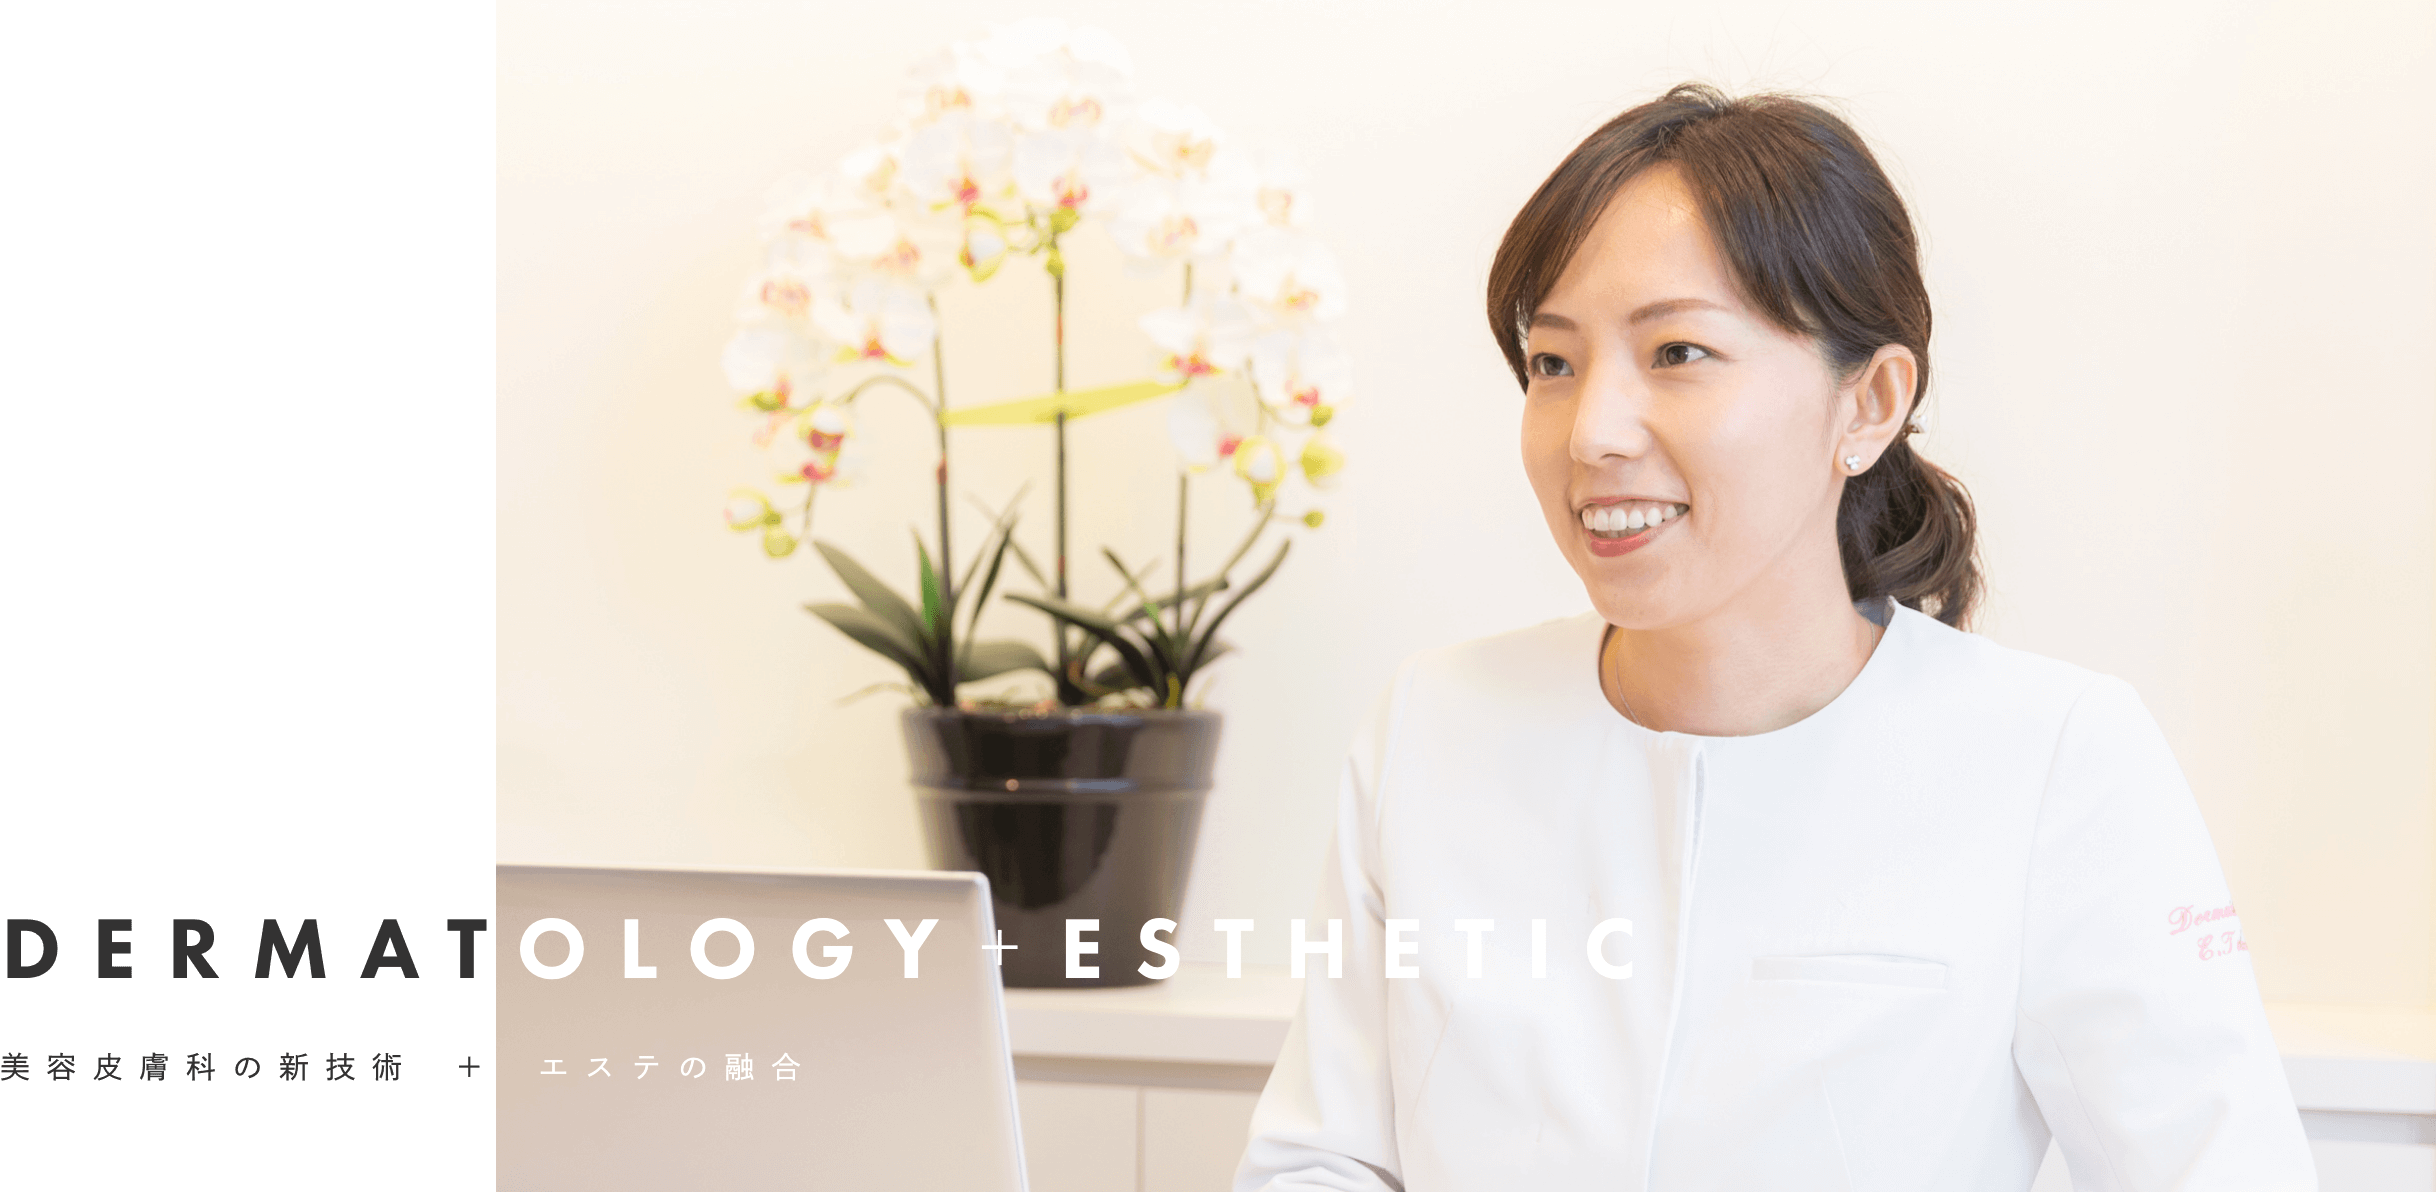 DERMATOLOGY＋ESTHETIC 美容皮膚科の新技術＋エステの融合